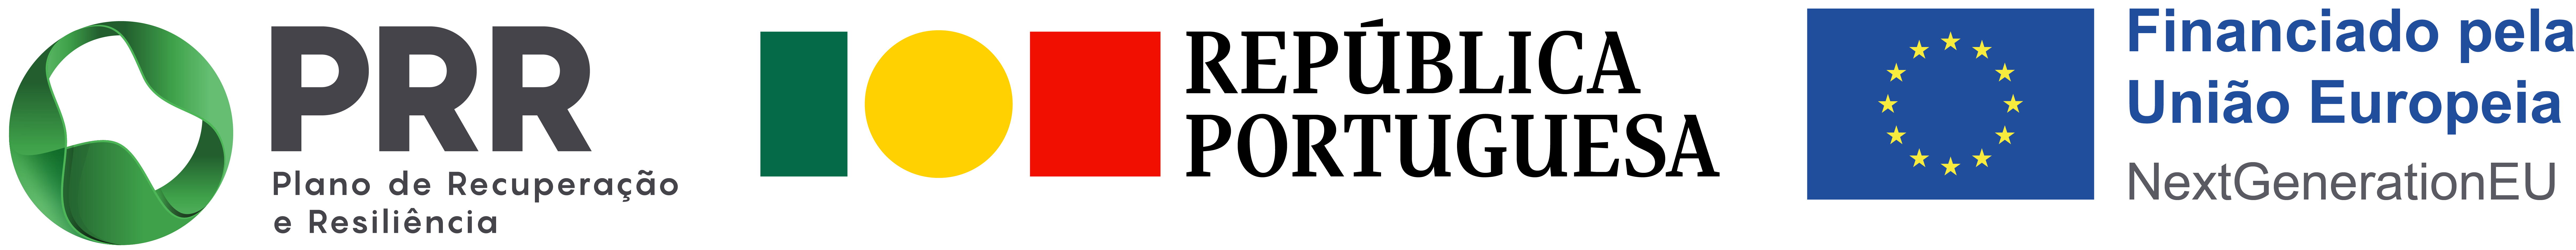 Logotipo Financiamento